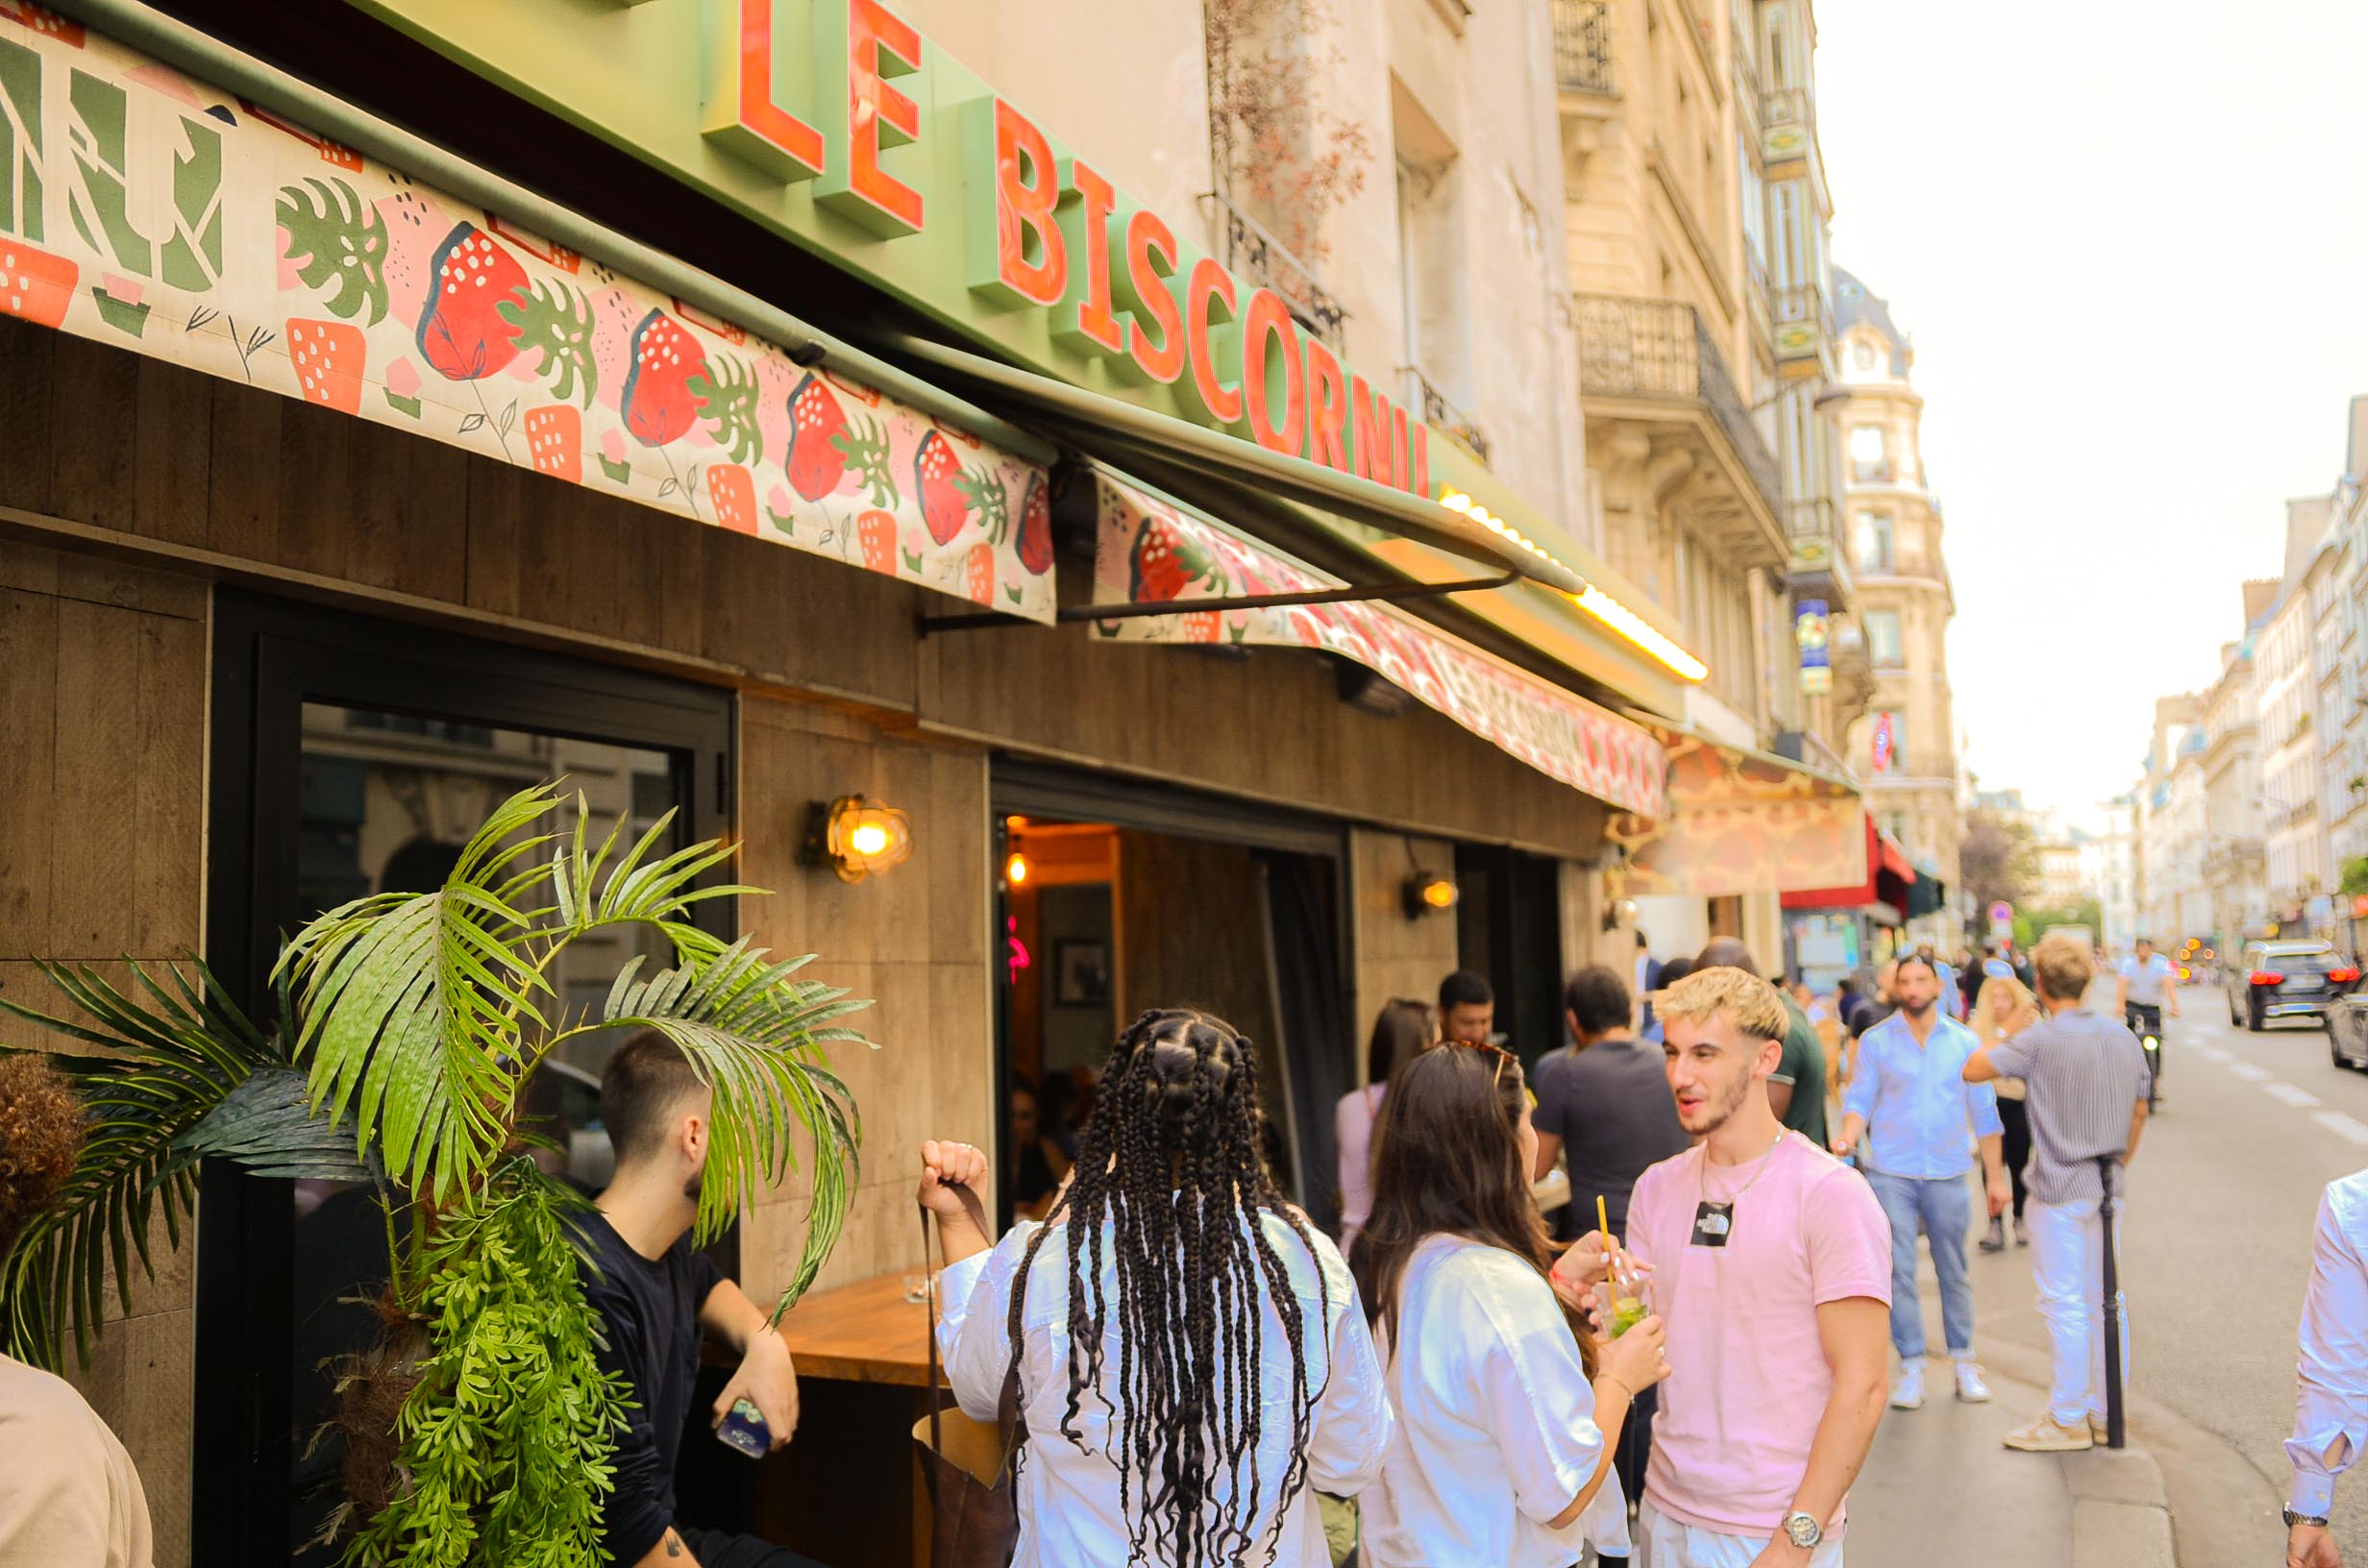 le-biscornu-paris-bar-restaurant-club-photo-18730